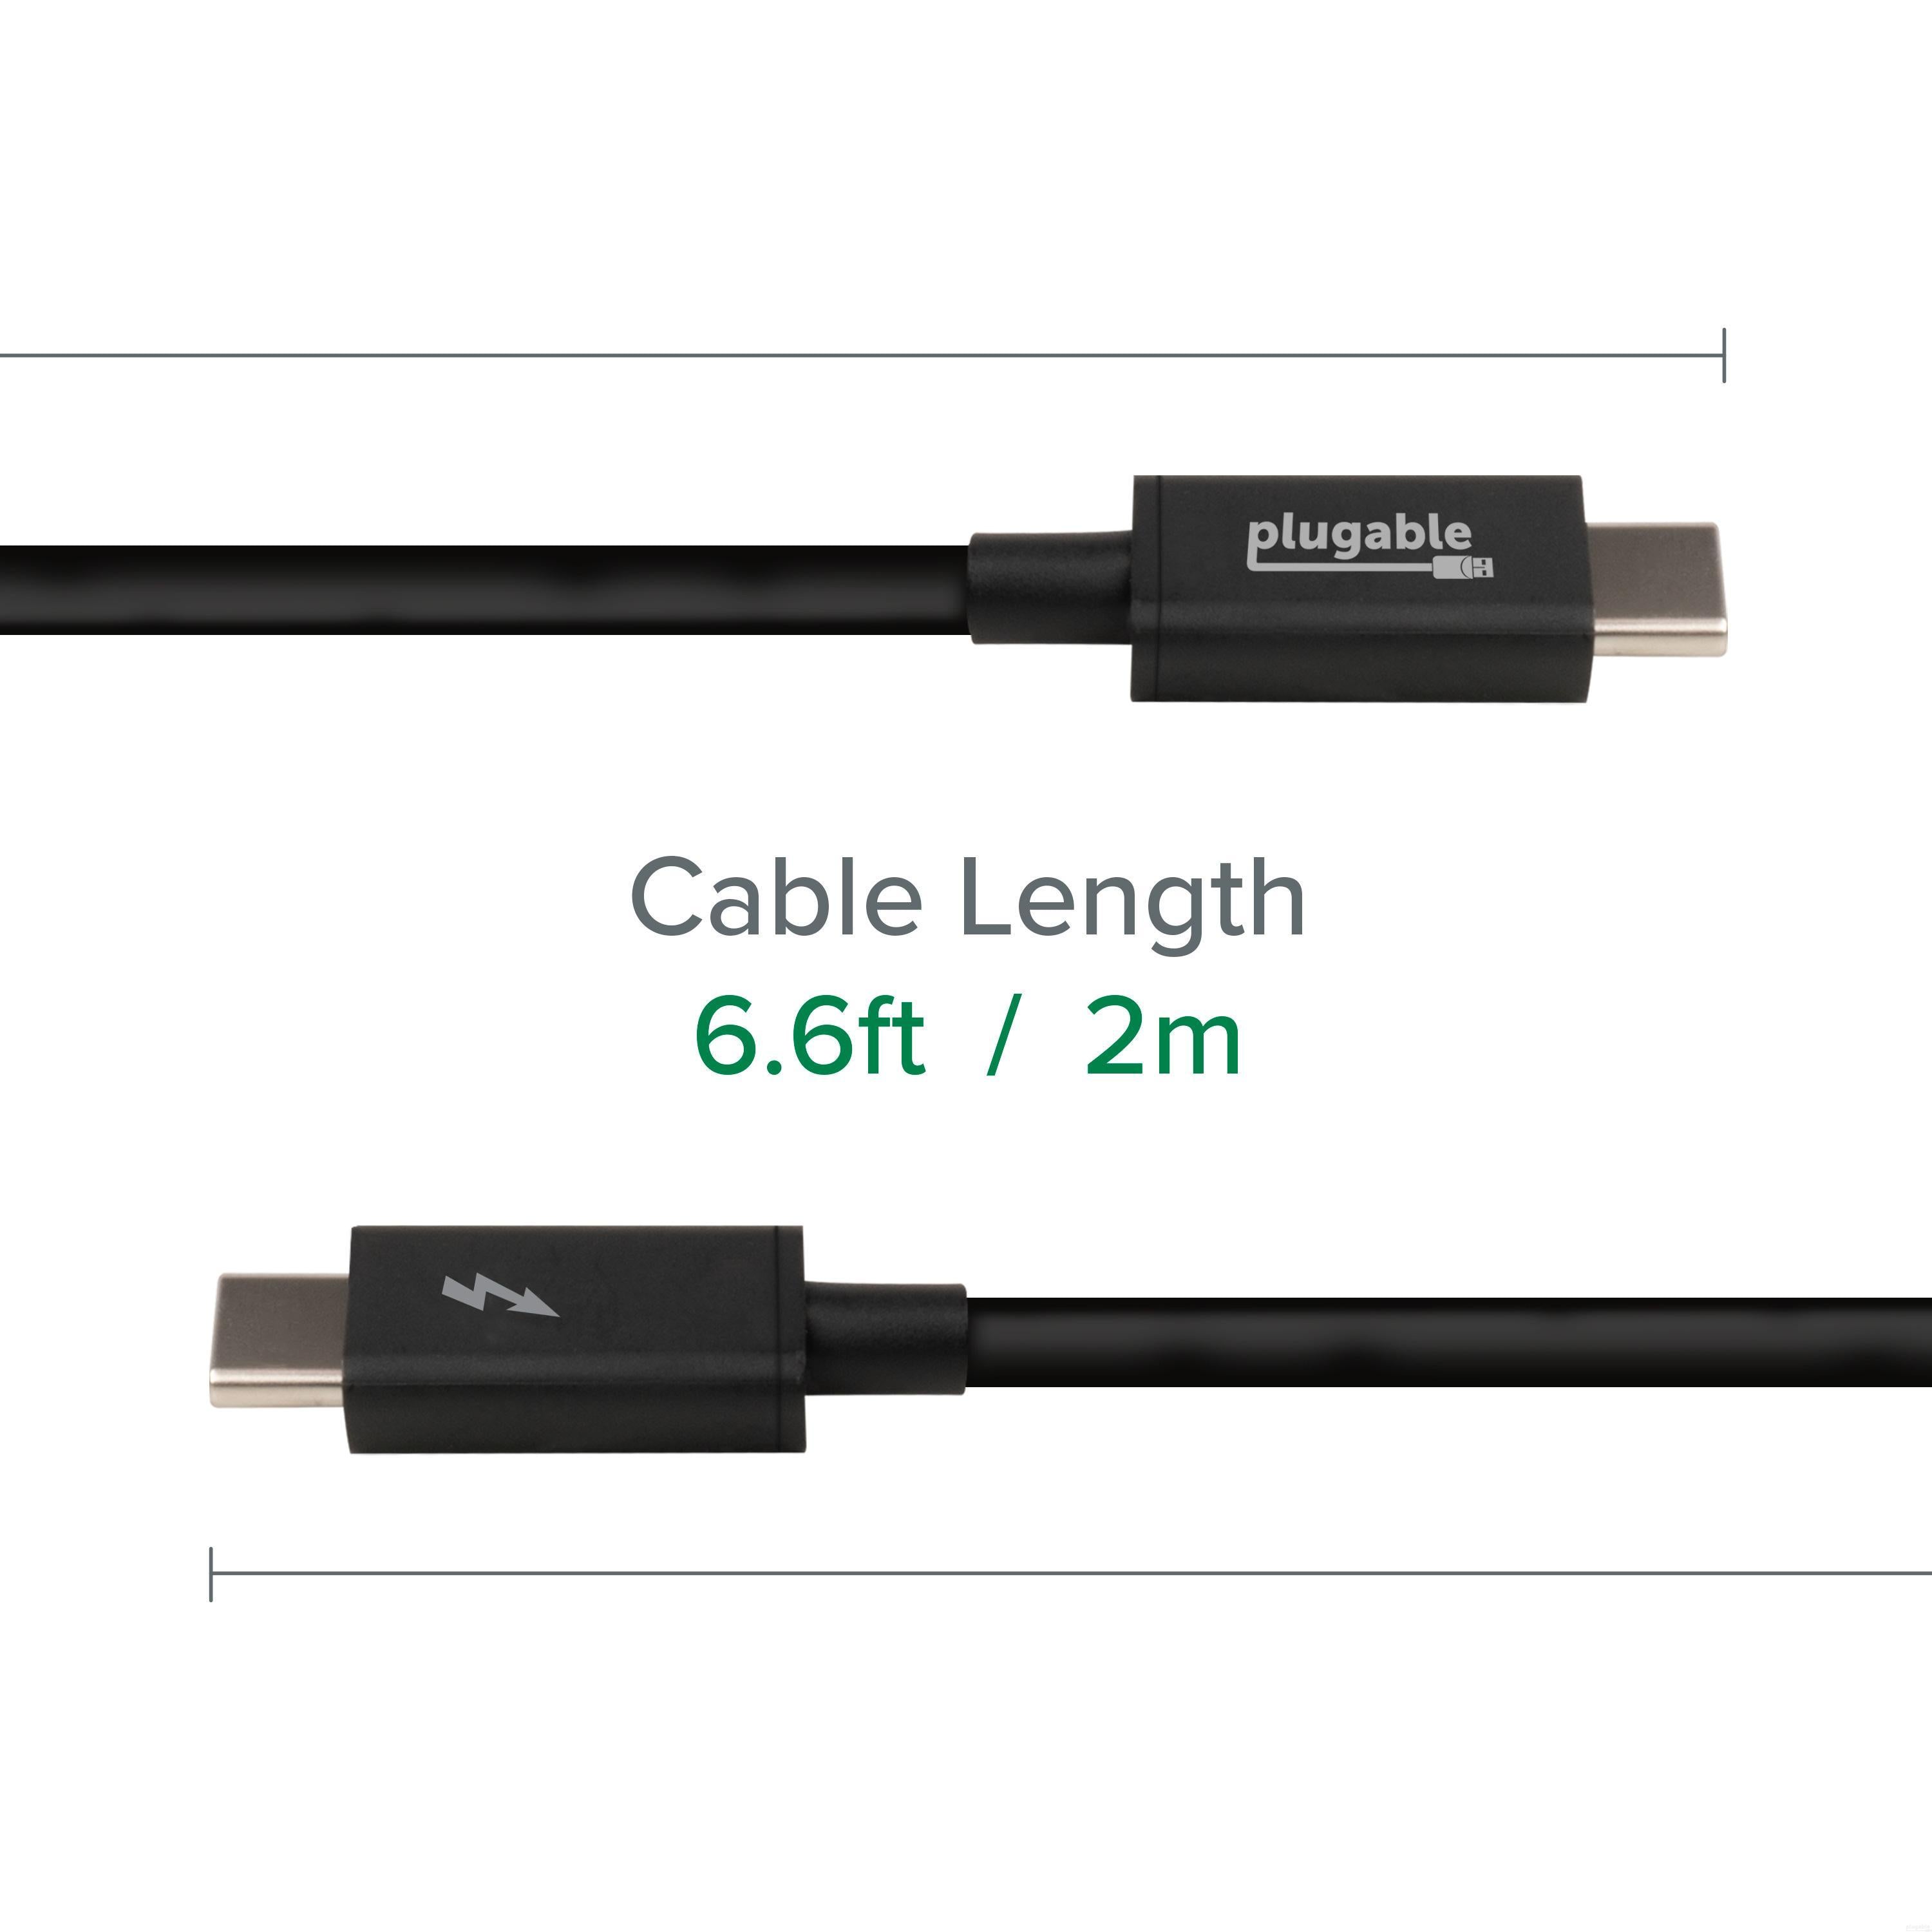 Plugable Thunderbolt 3 Cable (20Gbps, 6.6ft/2m) – Plugable